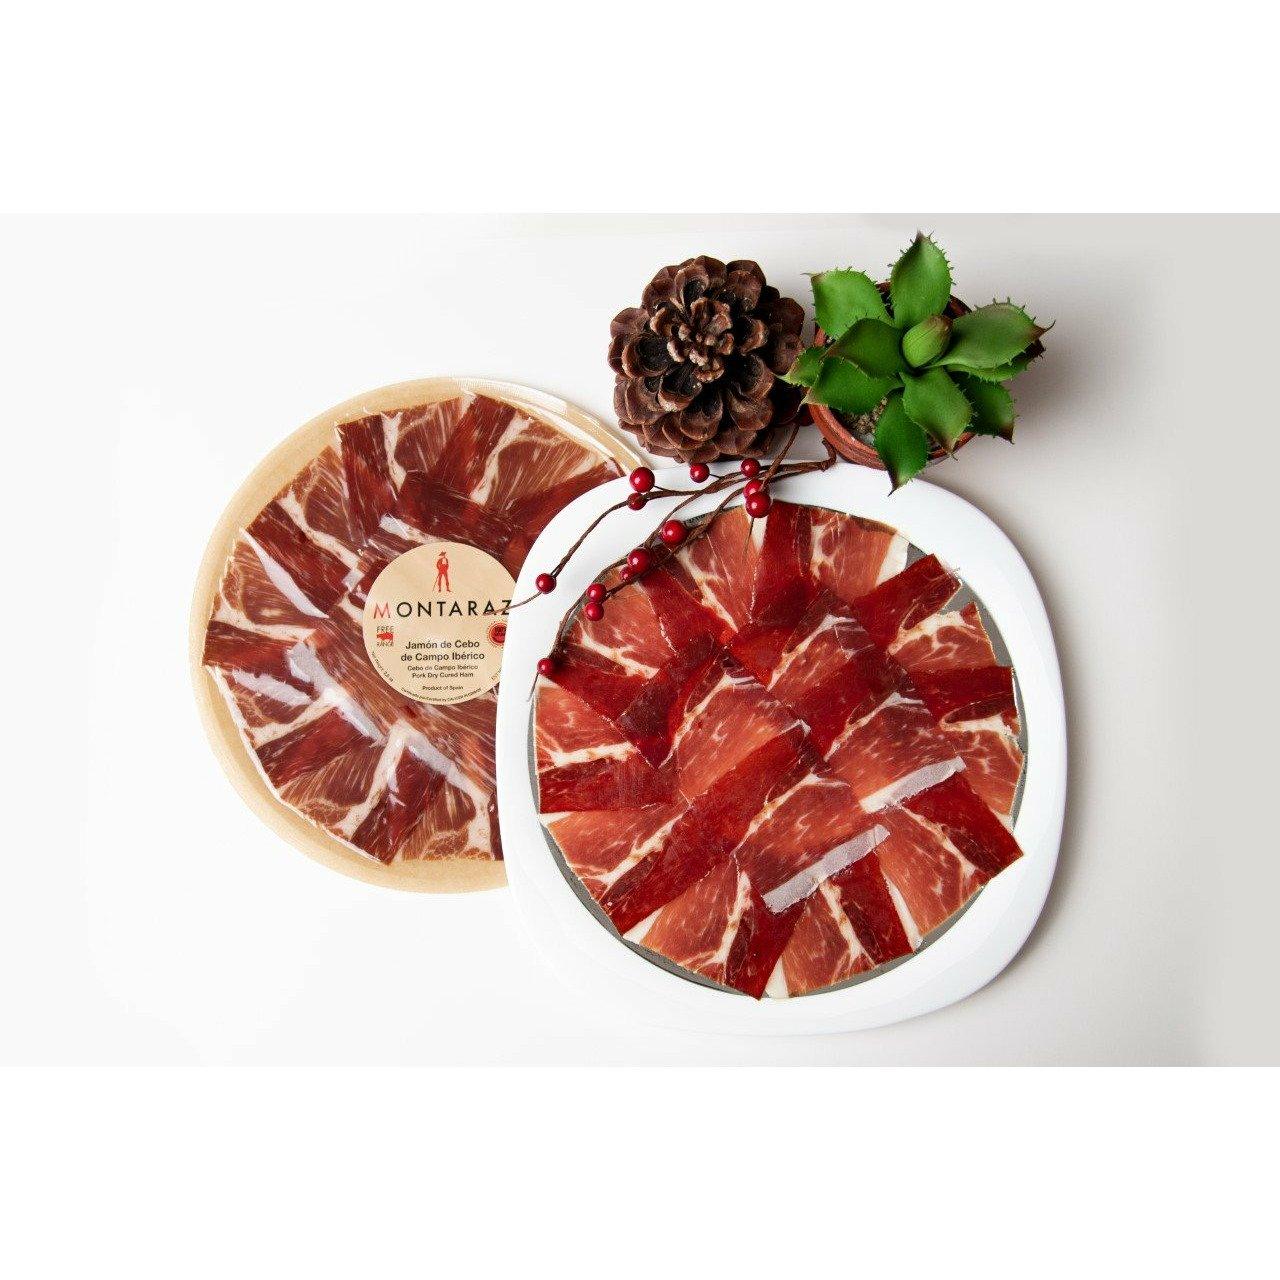 Jamon de Cebo de Campo Iberico - 50% Acorn Fed Party Plate Iberico Ham Hand Carved Style.